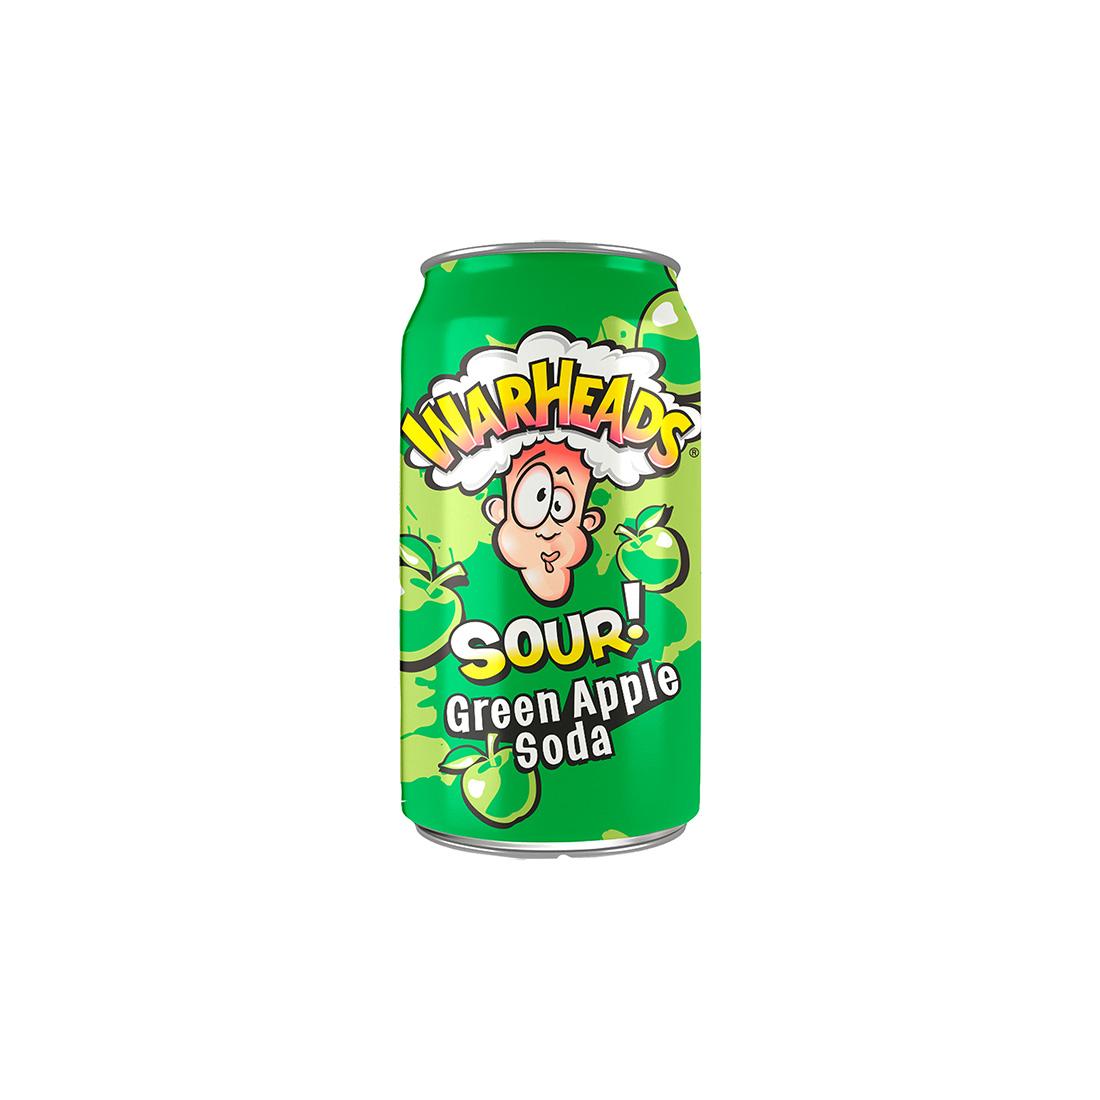 Warheads Green Apple Sour Soda